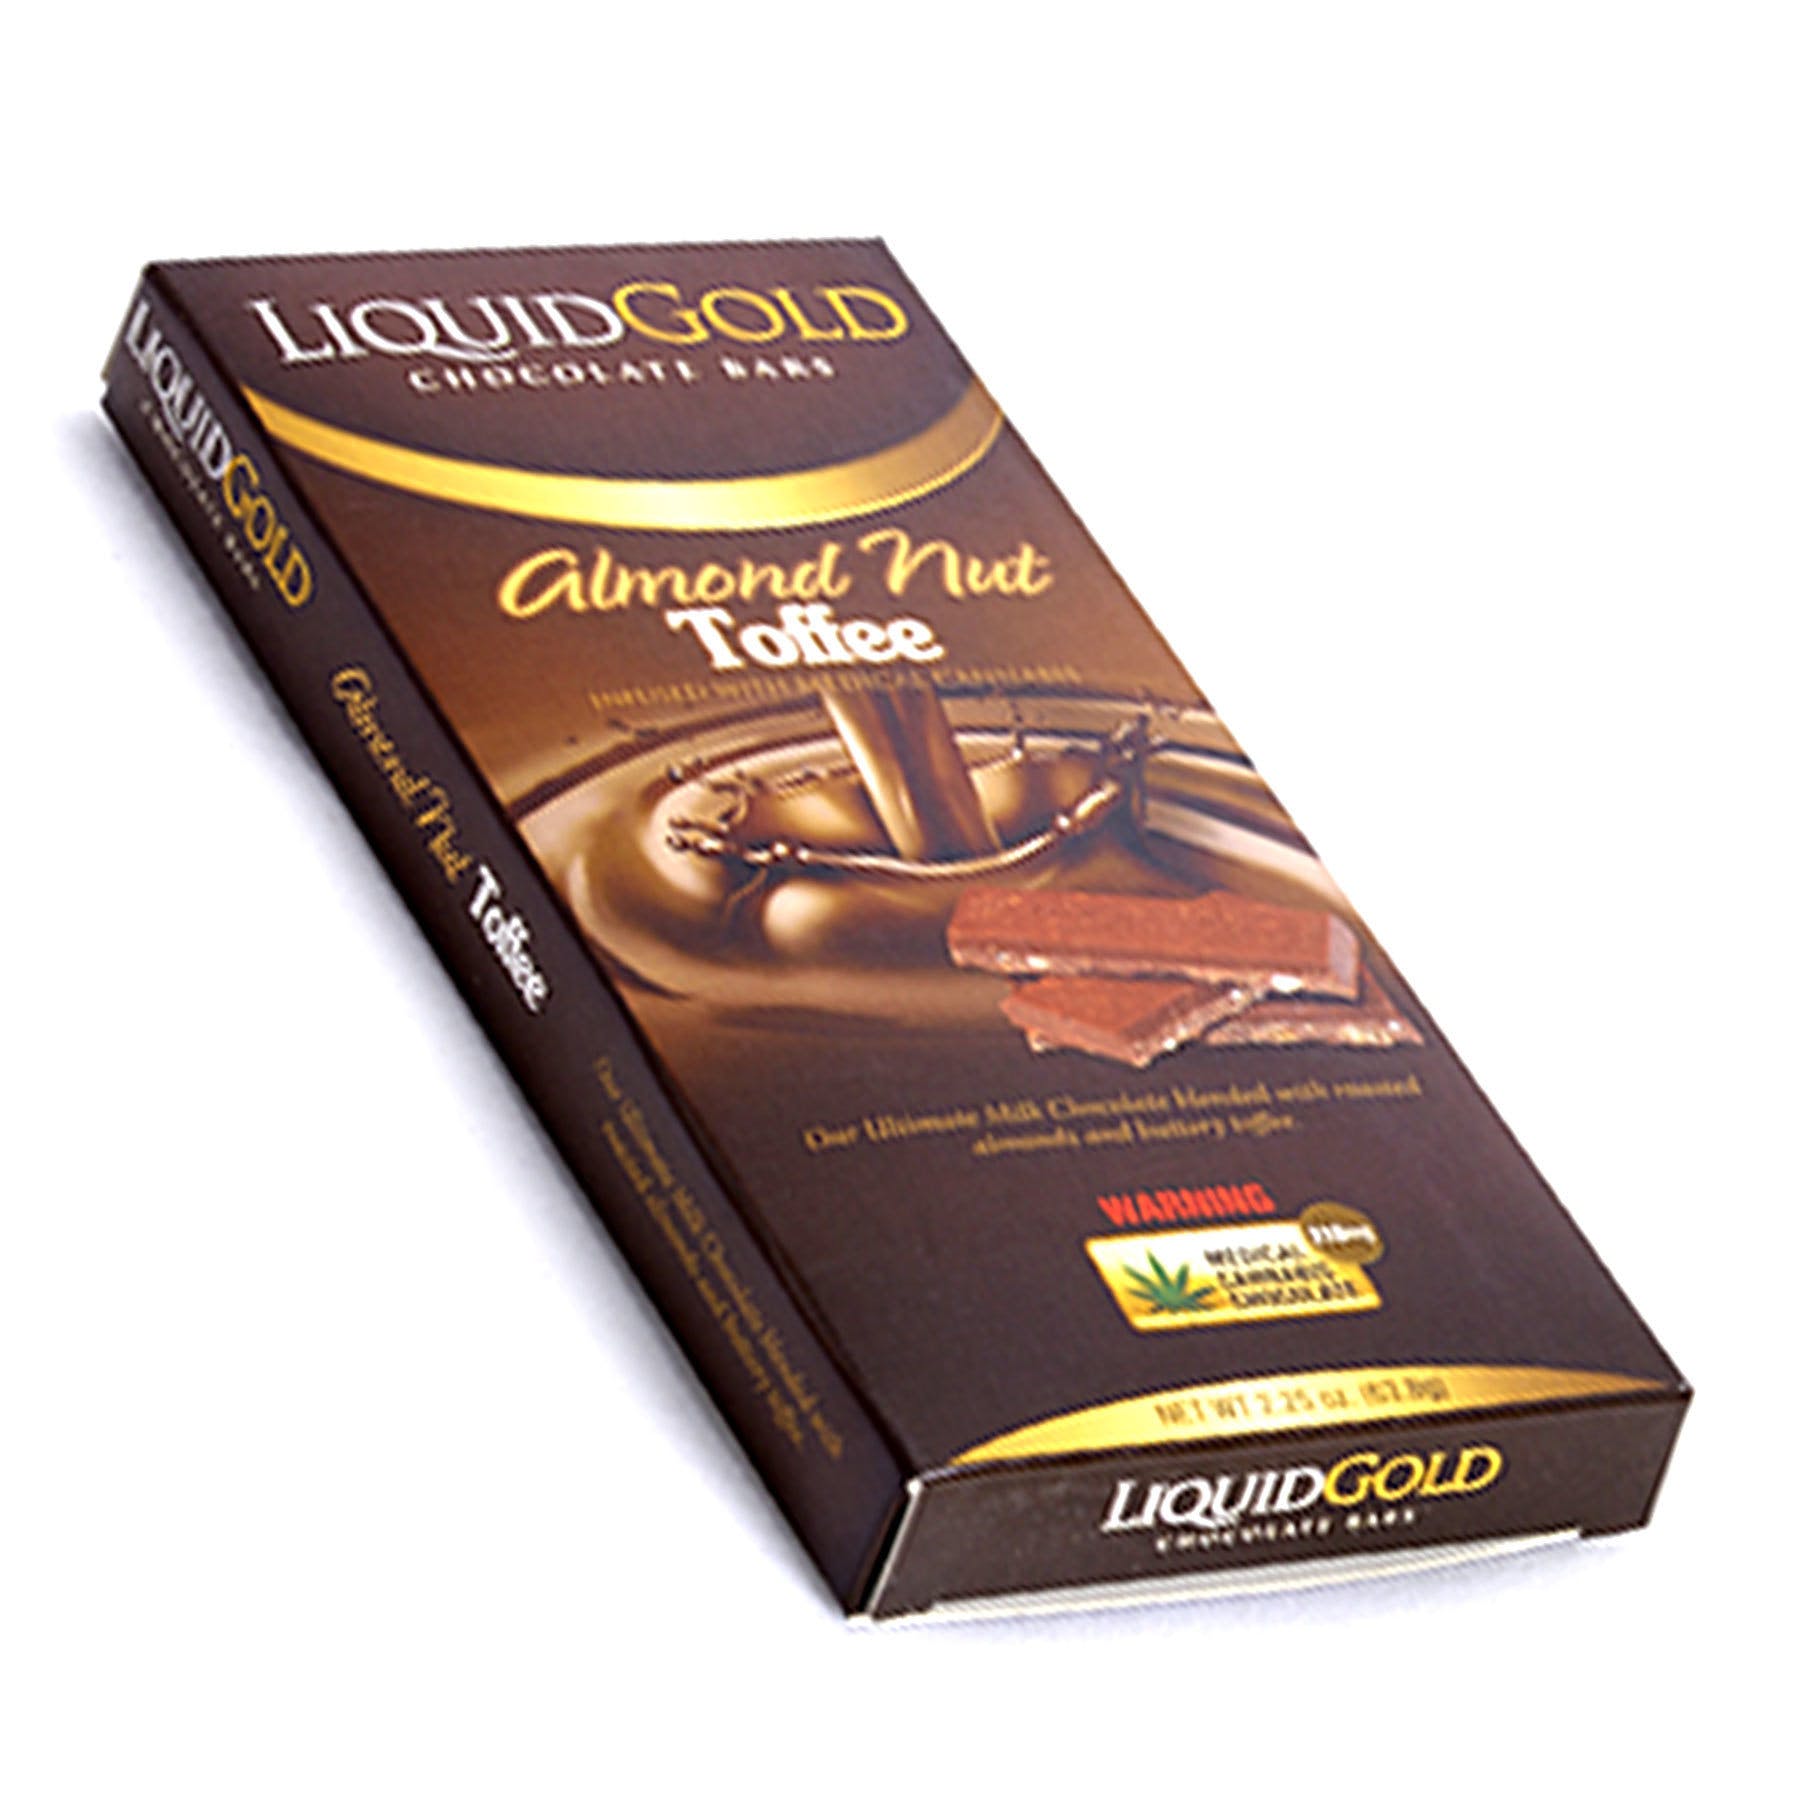 Liquid Gold Chocolate Bar - Almond Nut 210 mg THC